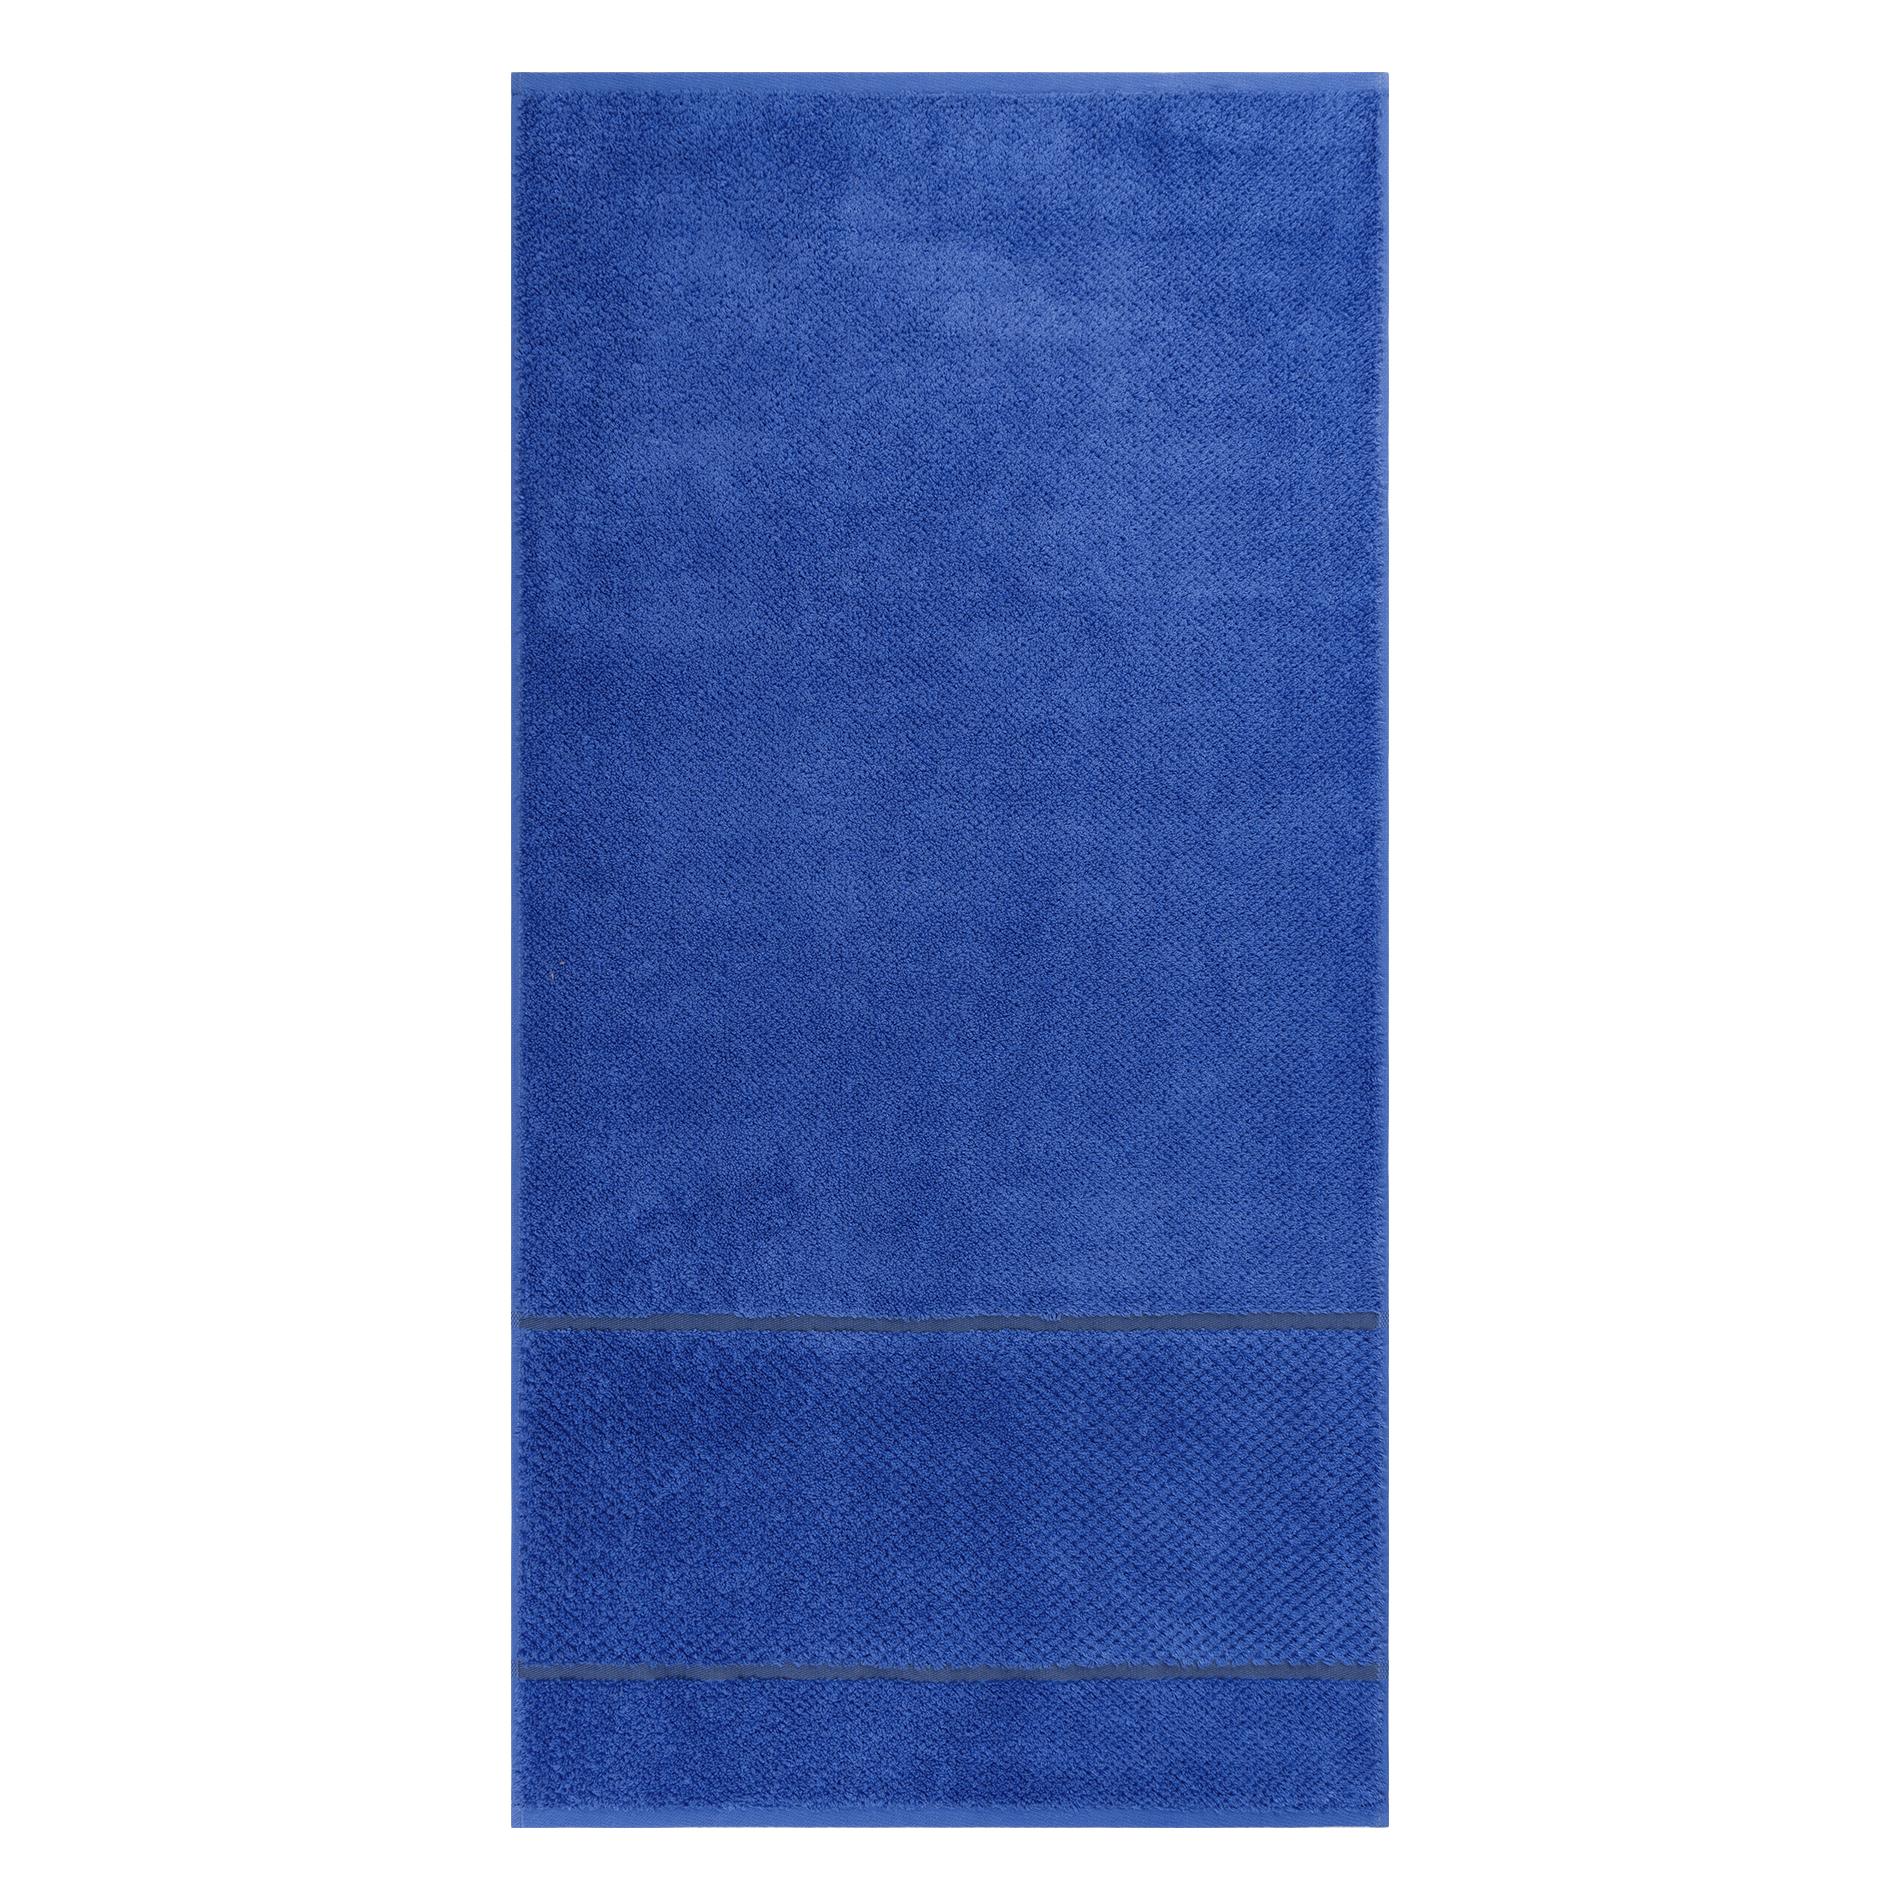 Махровое полотенце Cleanelly Fiordaliso синее 50х100 см махровое полотенце cleanelly albero bianco молочное 50х100 см